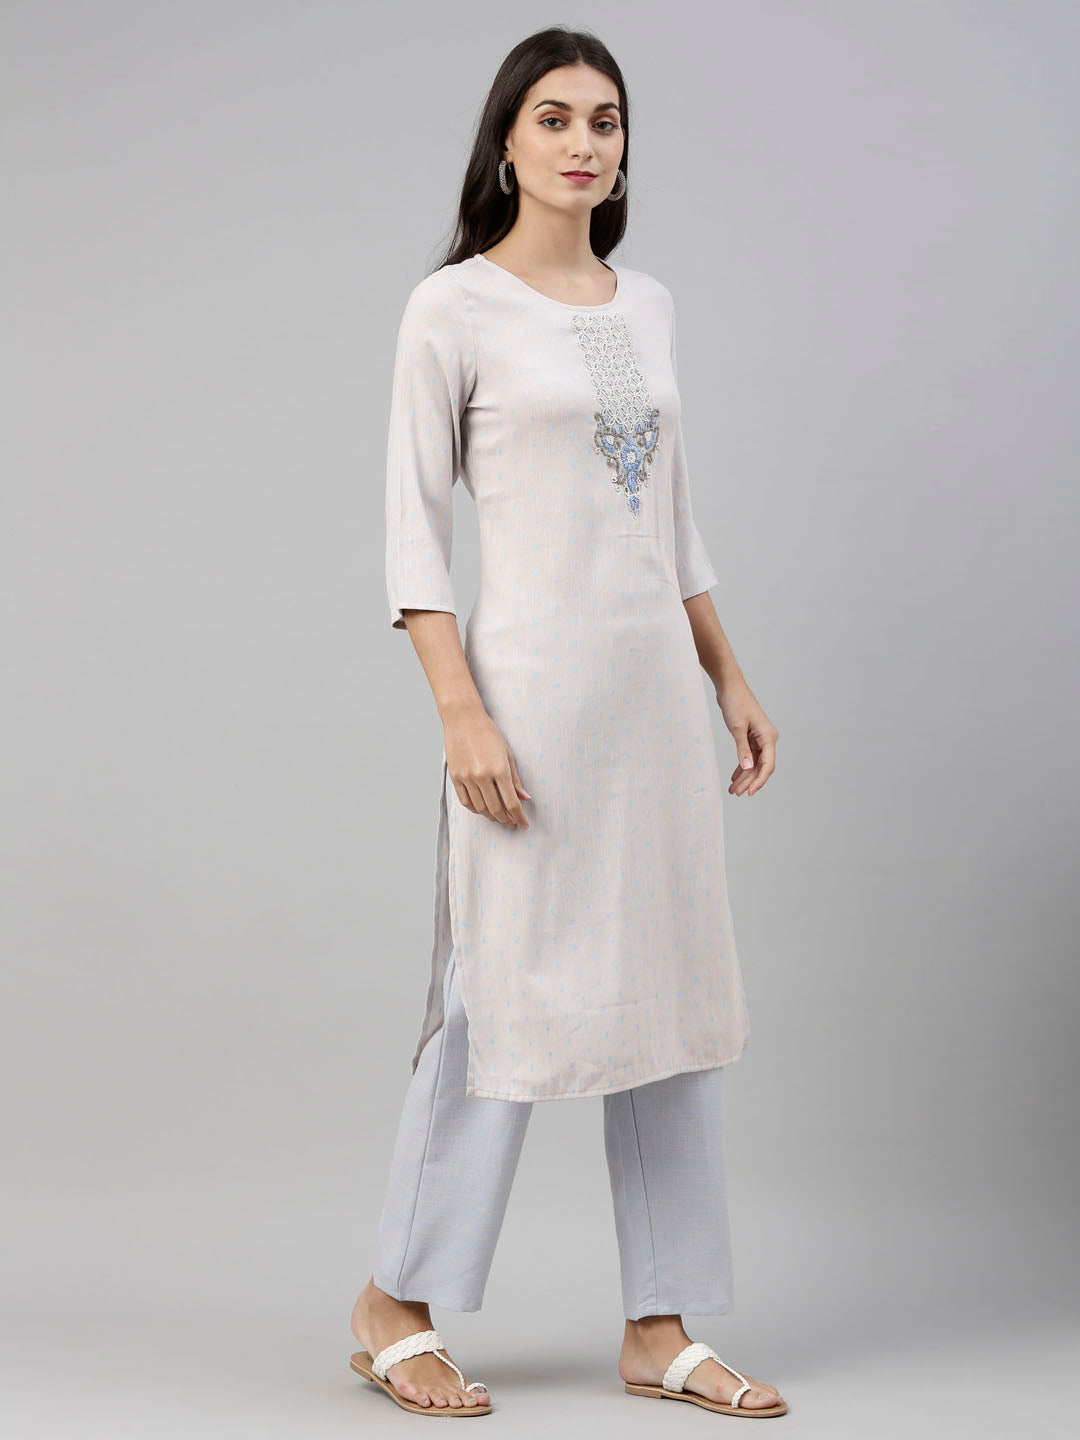 Neeru'S Grey Color, Cotton Fabric Suit-Pant